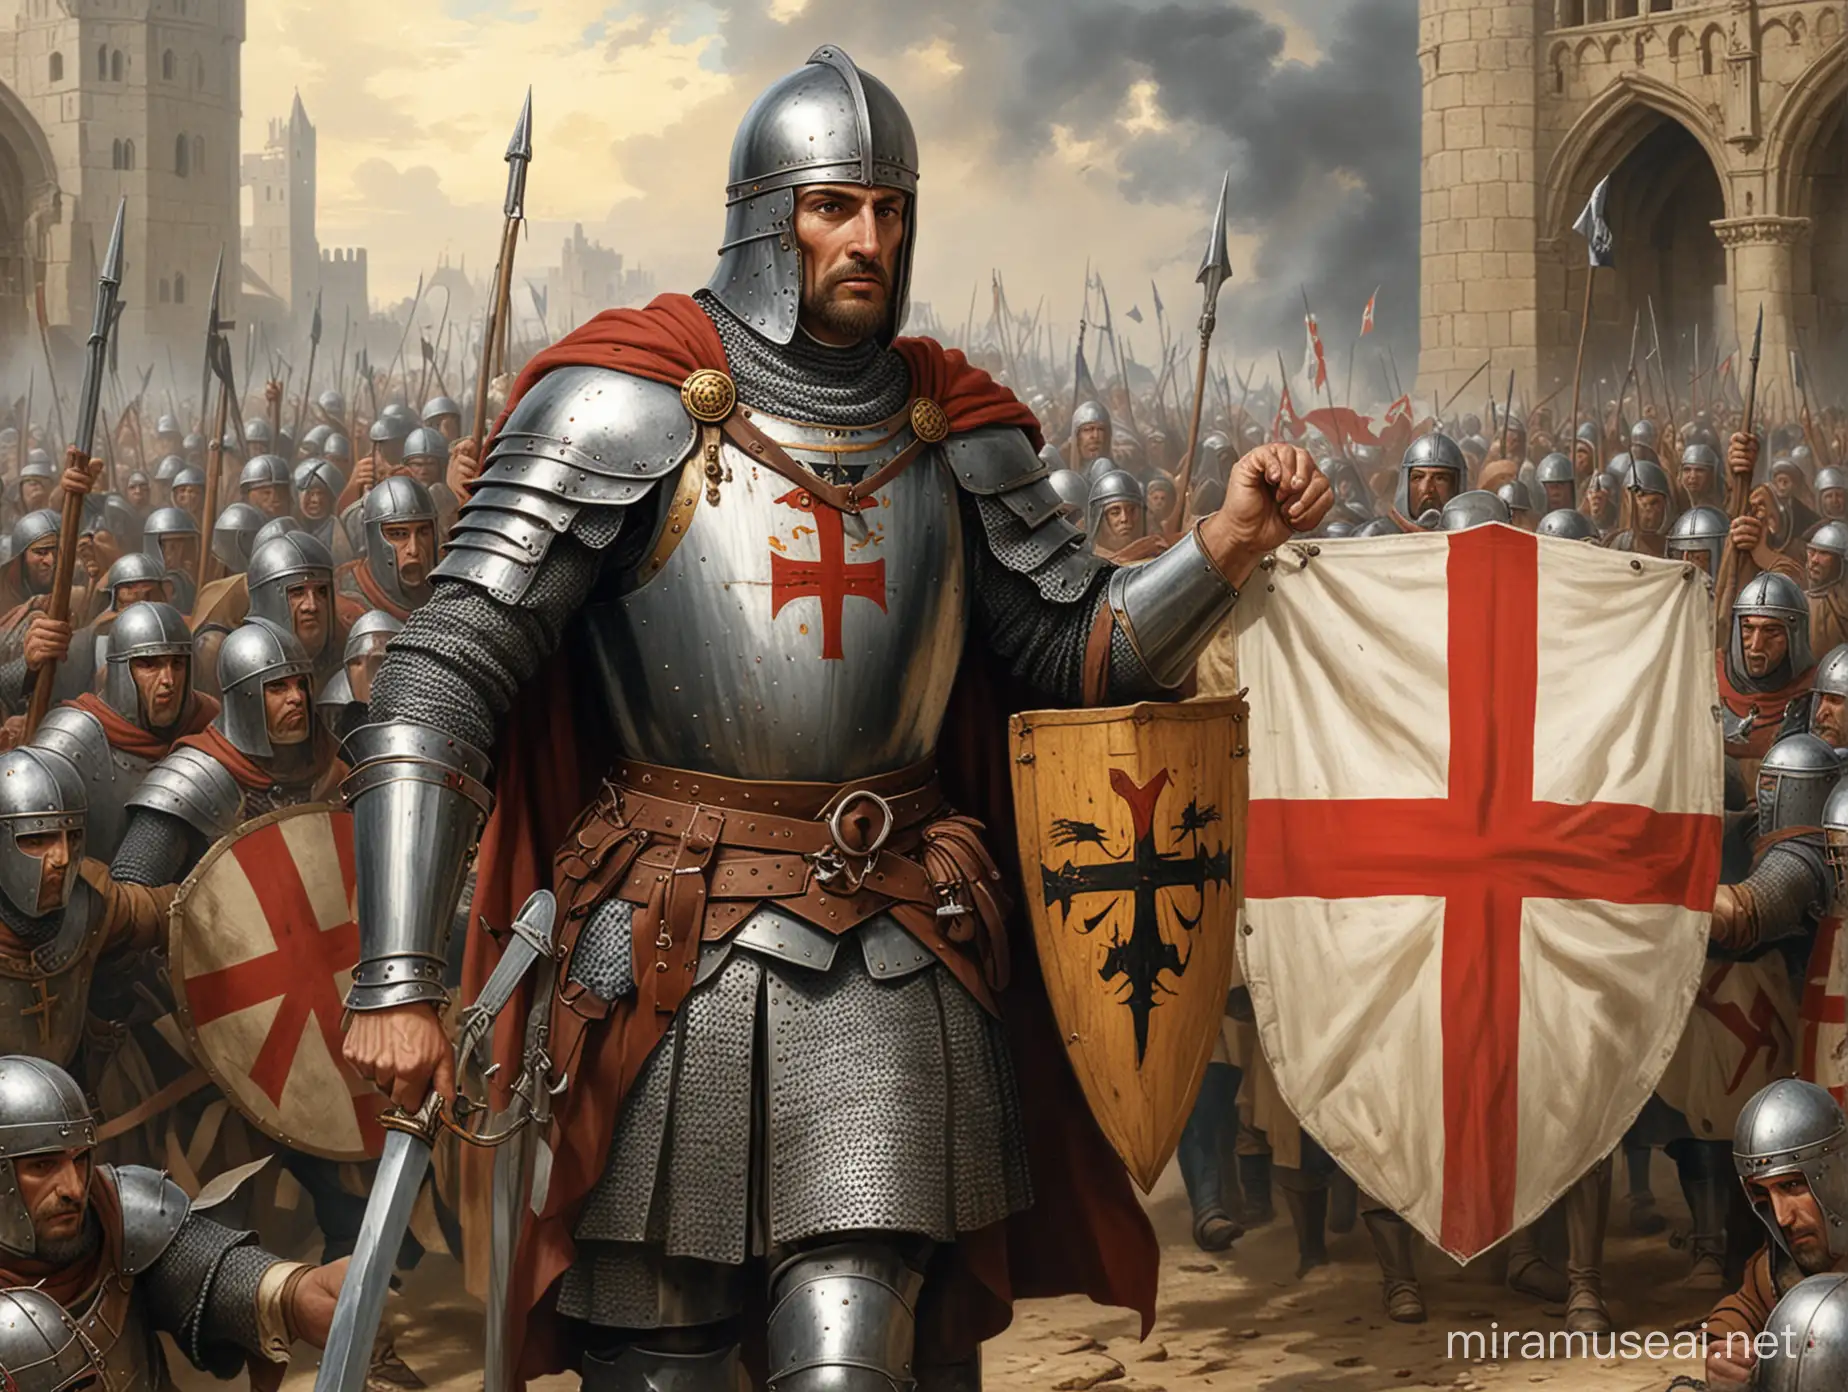 English Crusader Battling Against Islamic Forces